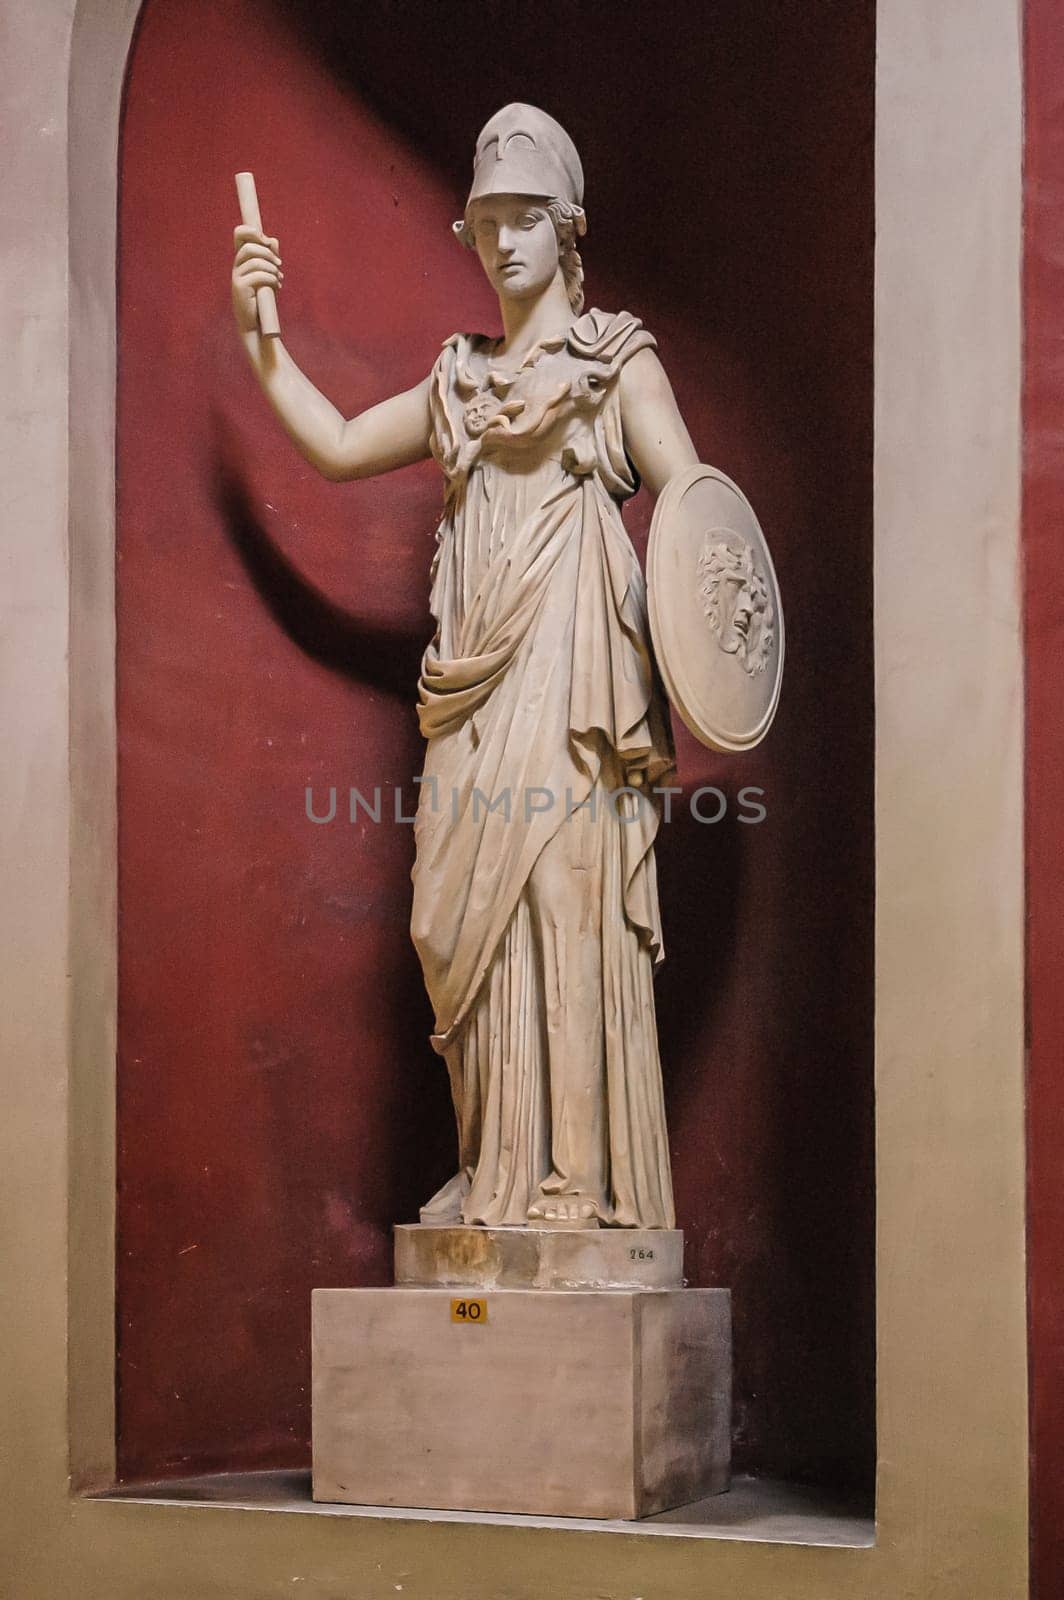 Vatican City, August 21, 2008: Athena. Pio Clementino Museum by ivanmoreno